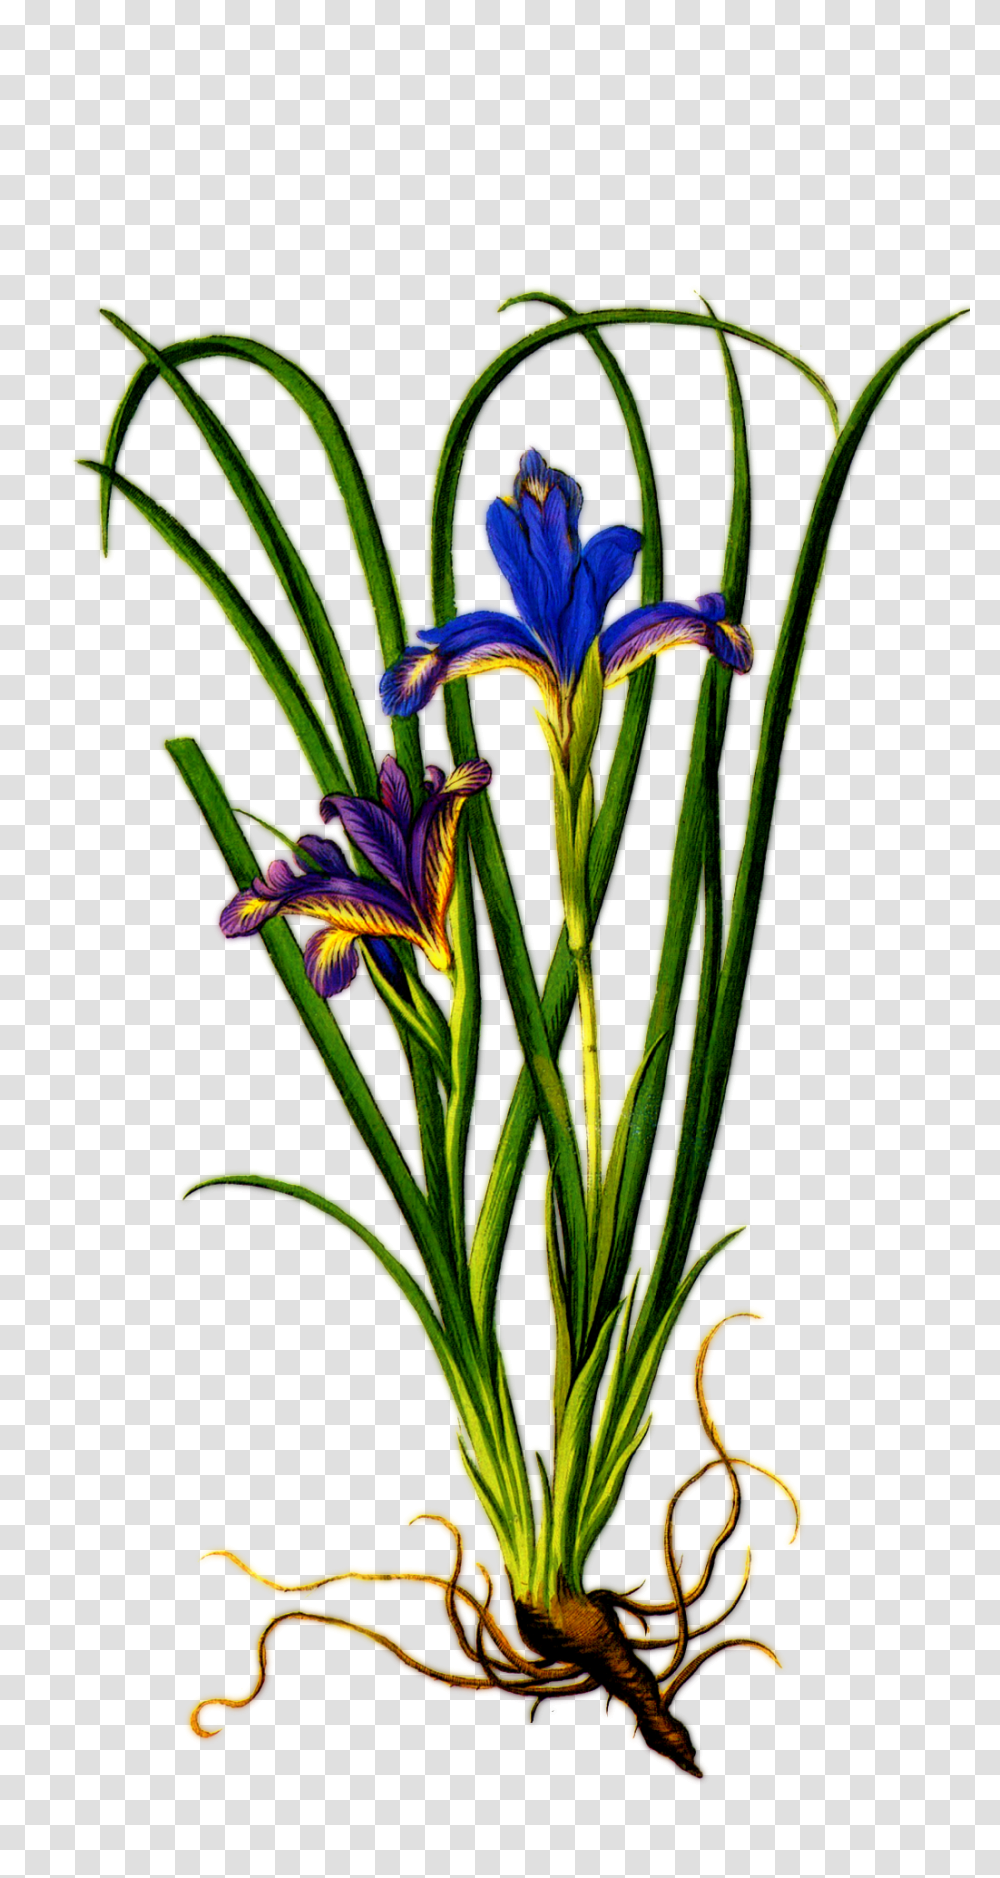 Download Iris Flower Clipart Iris Flower With Roots, Plant, Blossom, Flower Arrangement, Pineapple Transparent Png